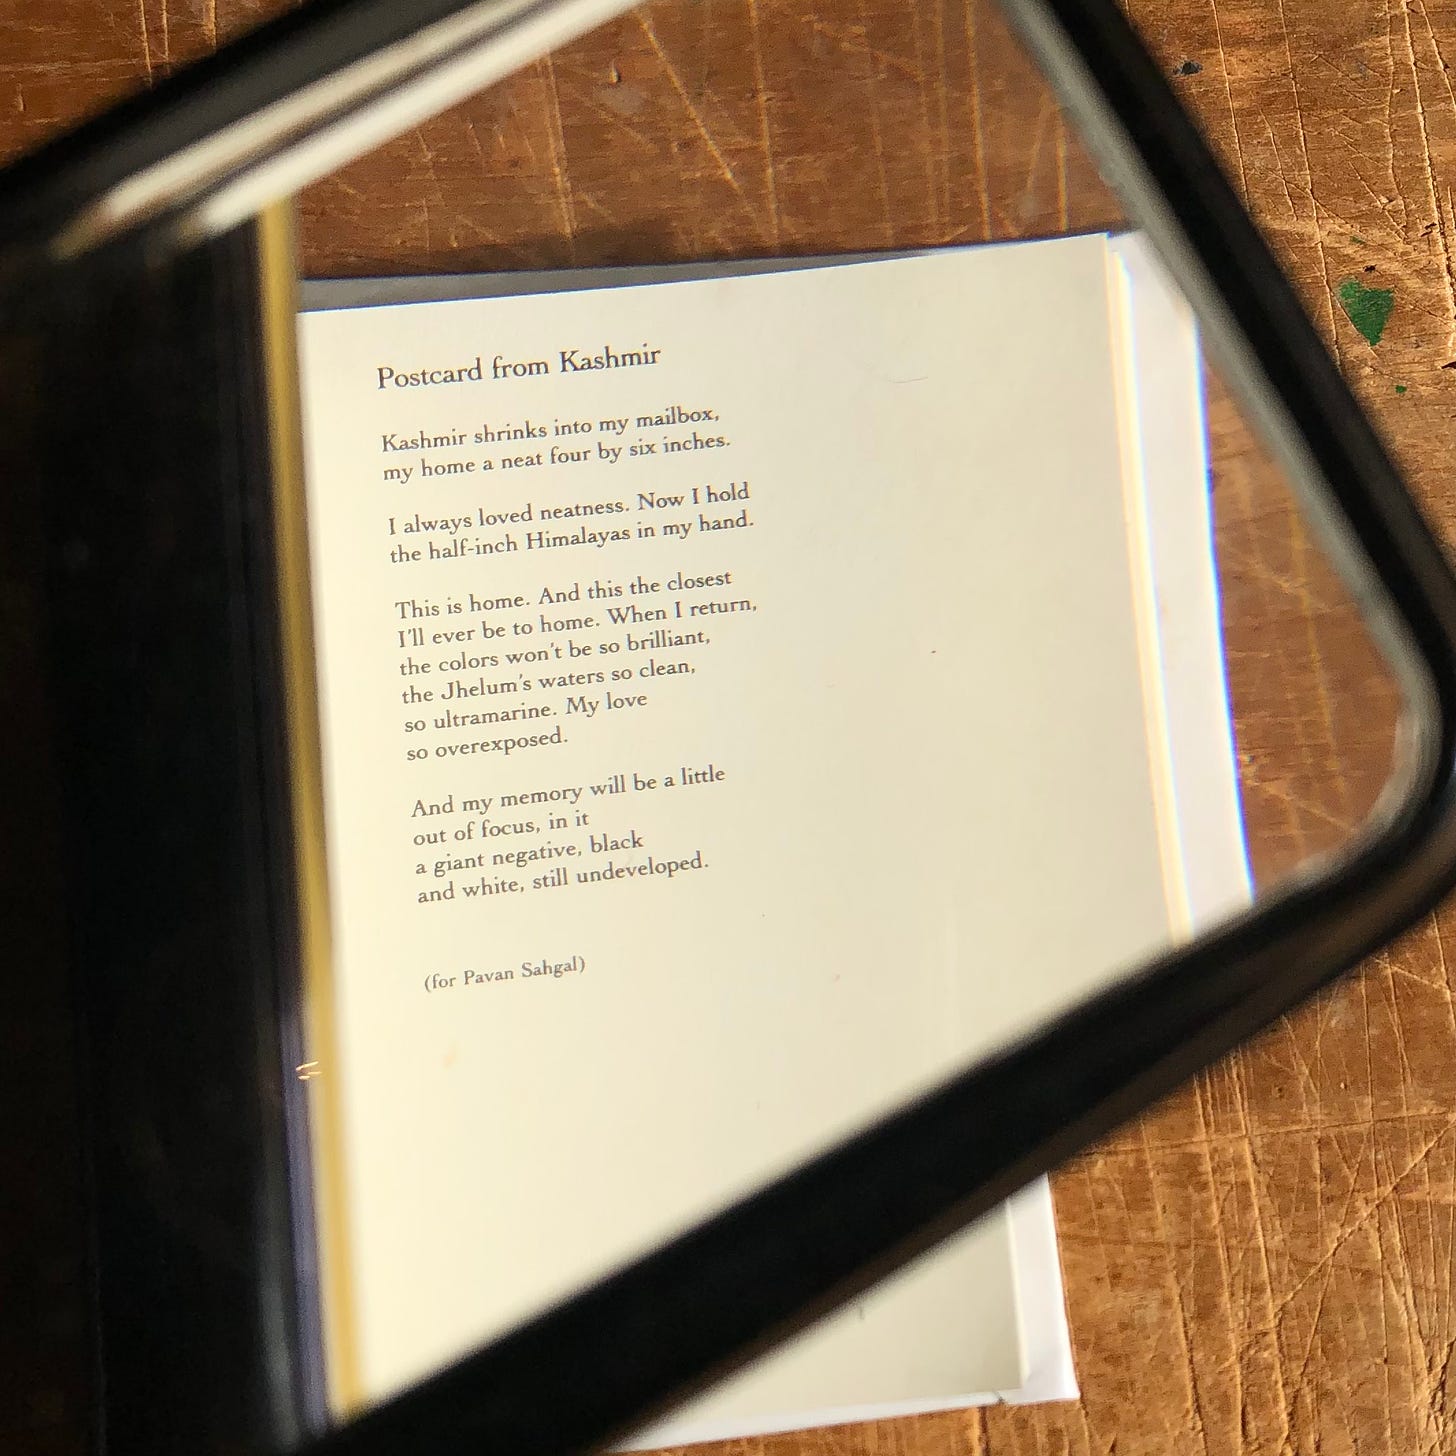 Agha Shahid Ali's "Postcard from Kashmir" seen through a magnifying glass